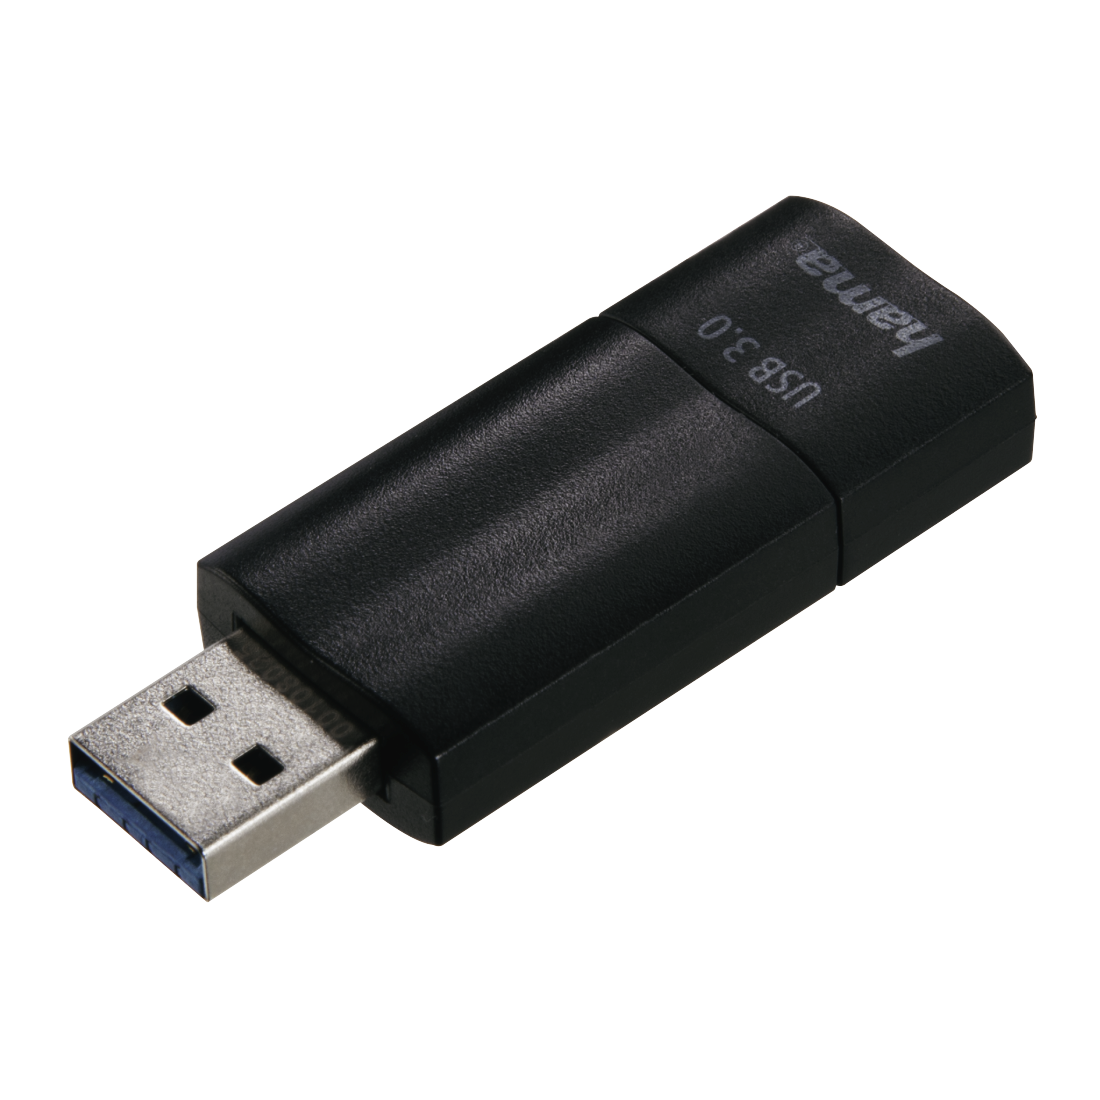 00108025 Hama "Probo" USB Flash Drive, USB 3.0, 16 GB, 40 MB/s, black